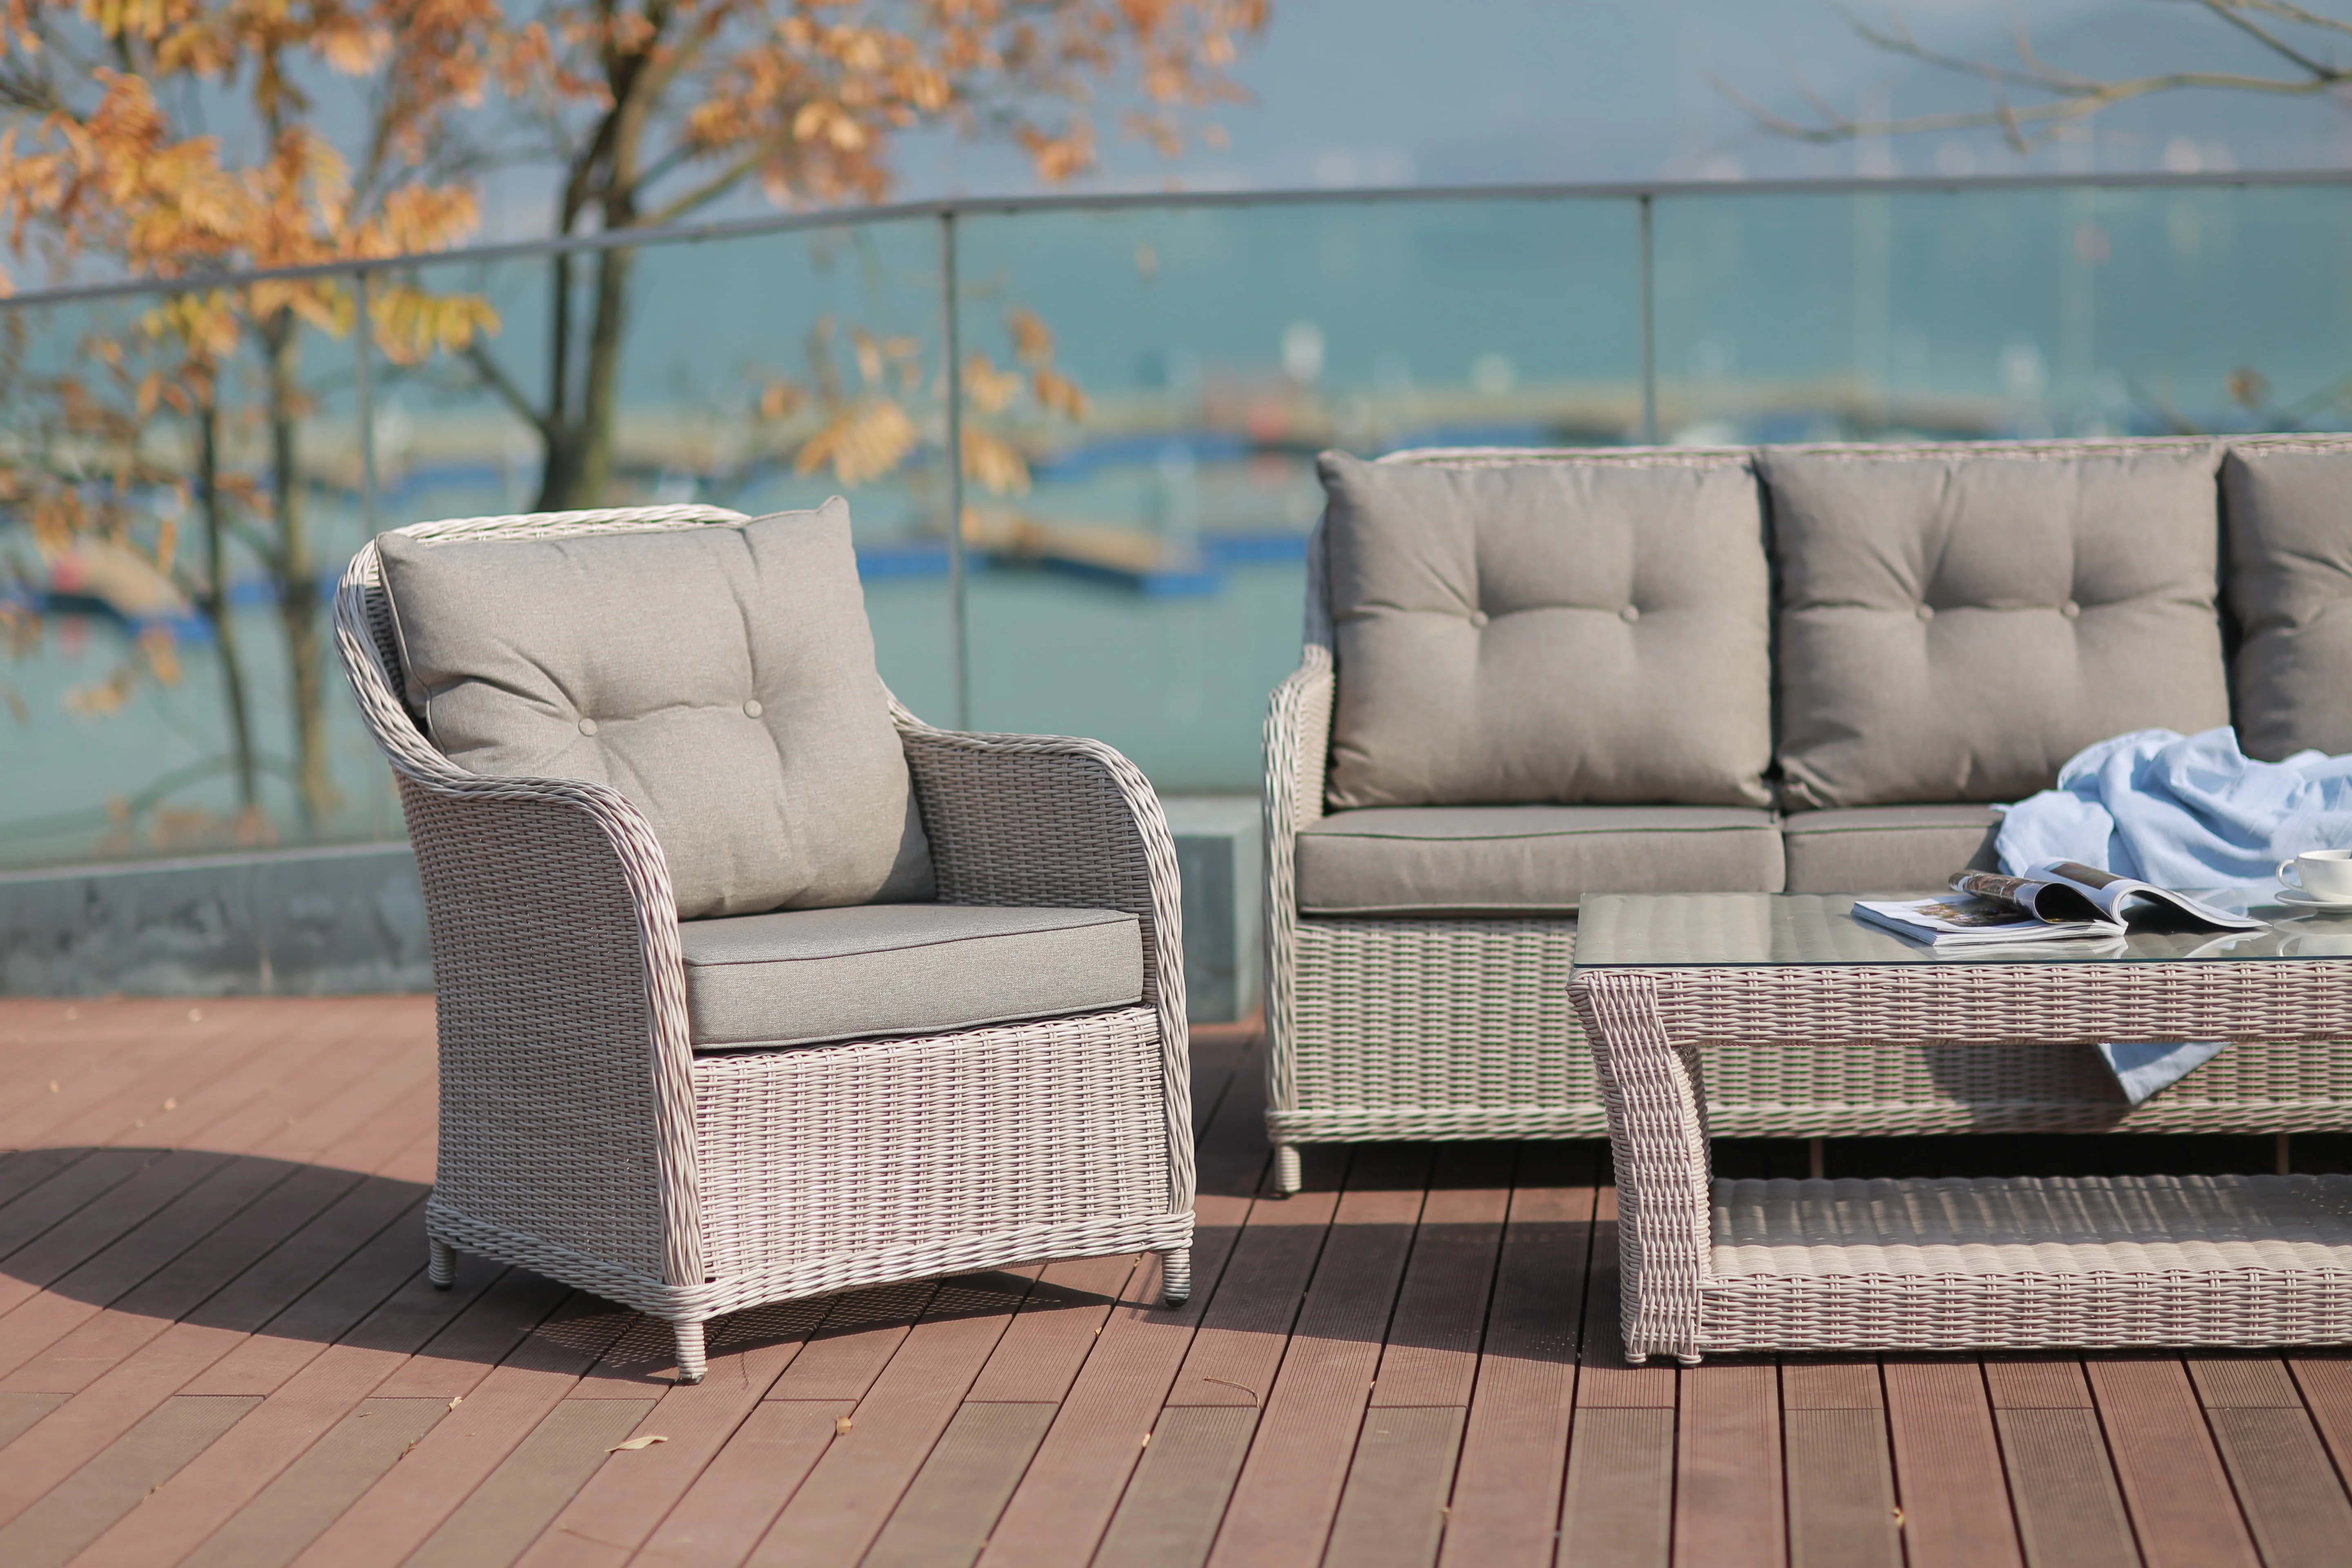 
Modern design popular four piece set courtyard garden furniture outdoor rattan sofa 